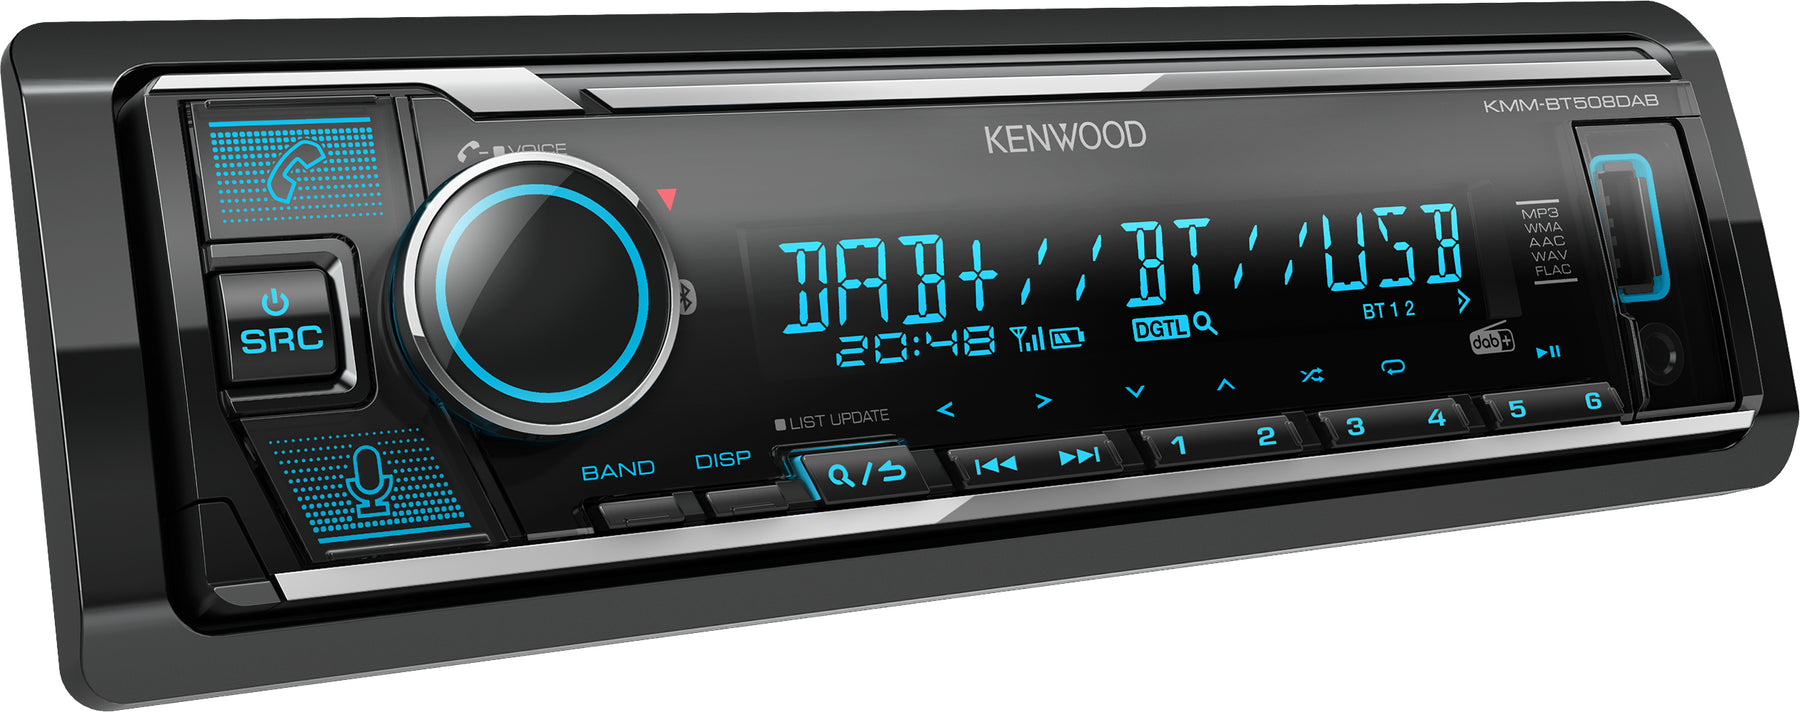 Kenwood KMM-BT508DAB. Digital Media Receiver CON Digital radio DAB+, Bluetooth e compatibilità con Amazon Alexa